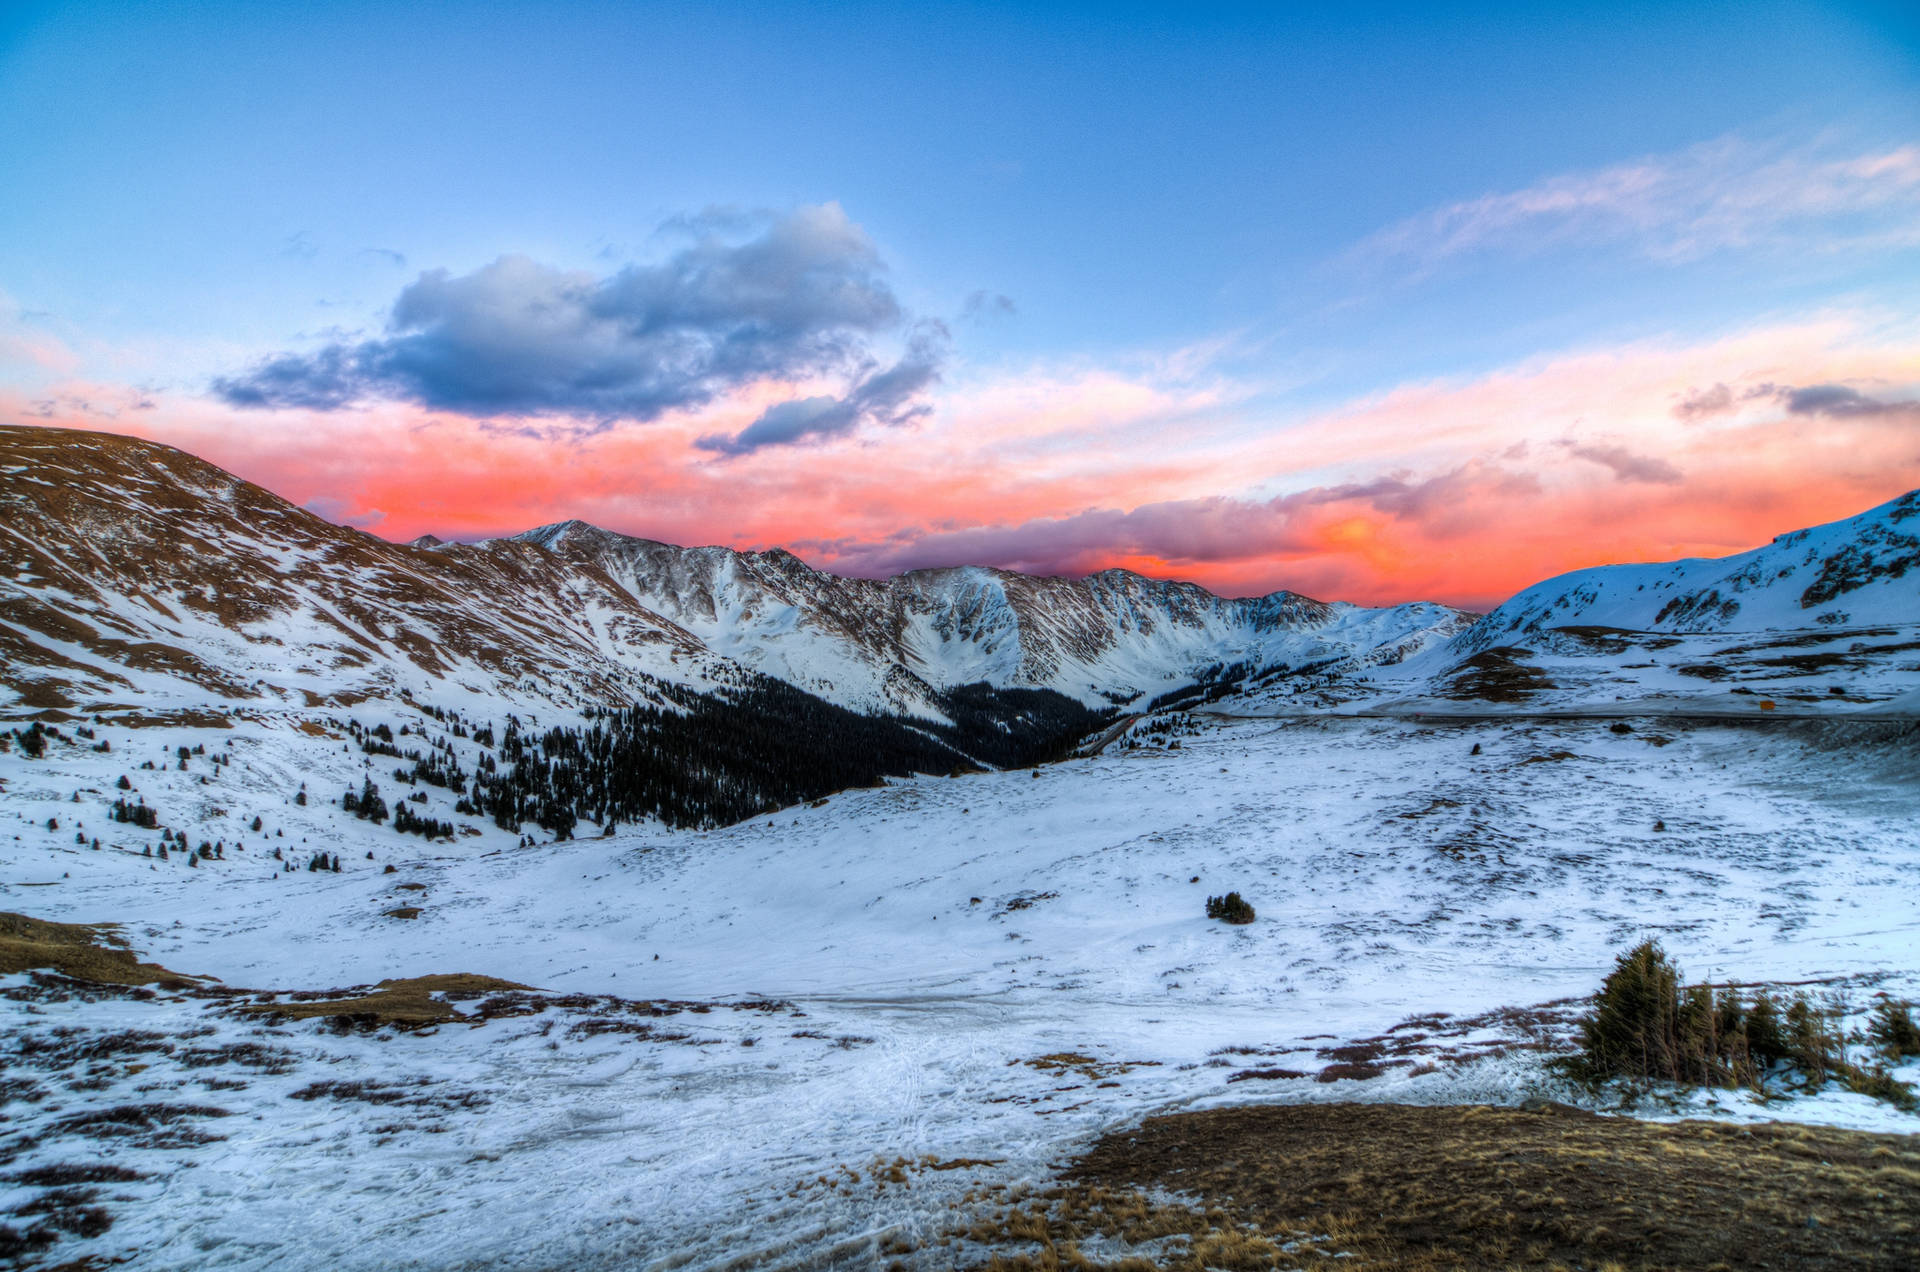 Mountain Sunset Background